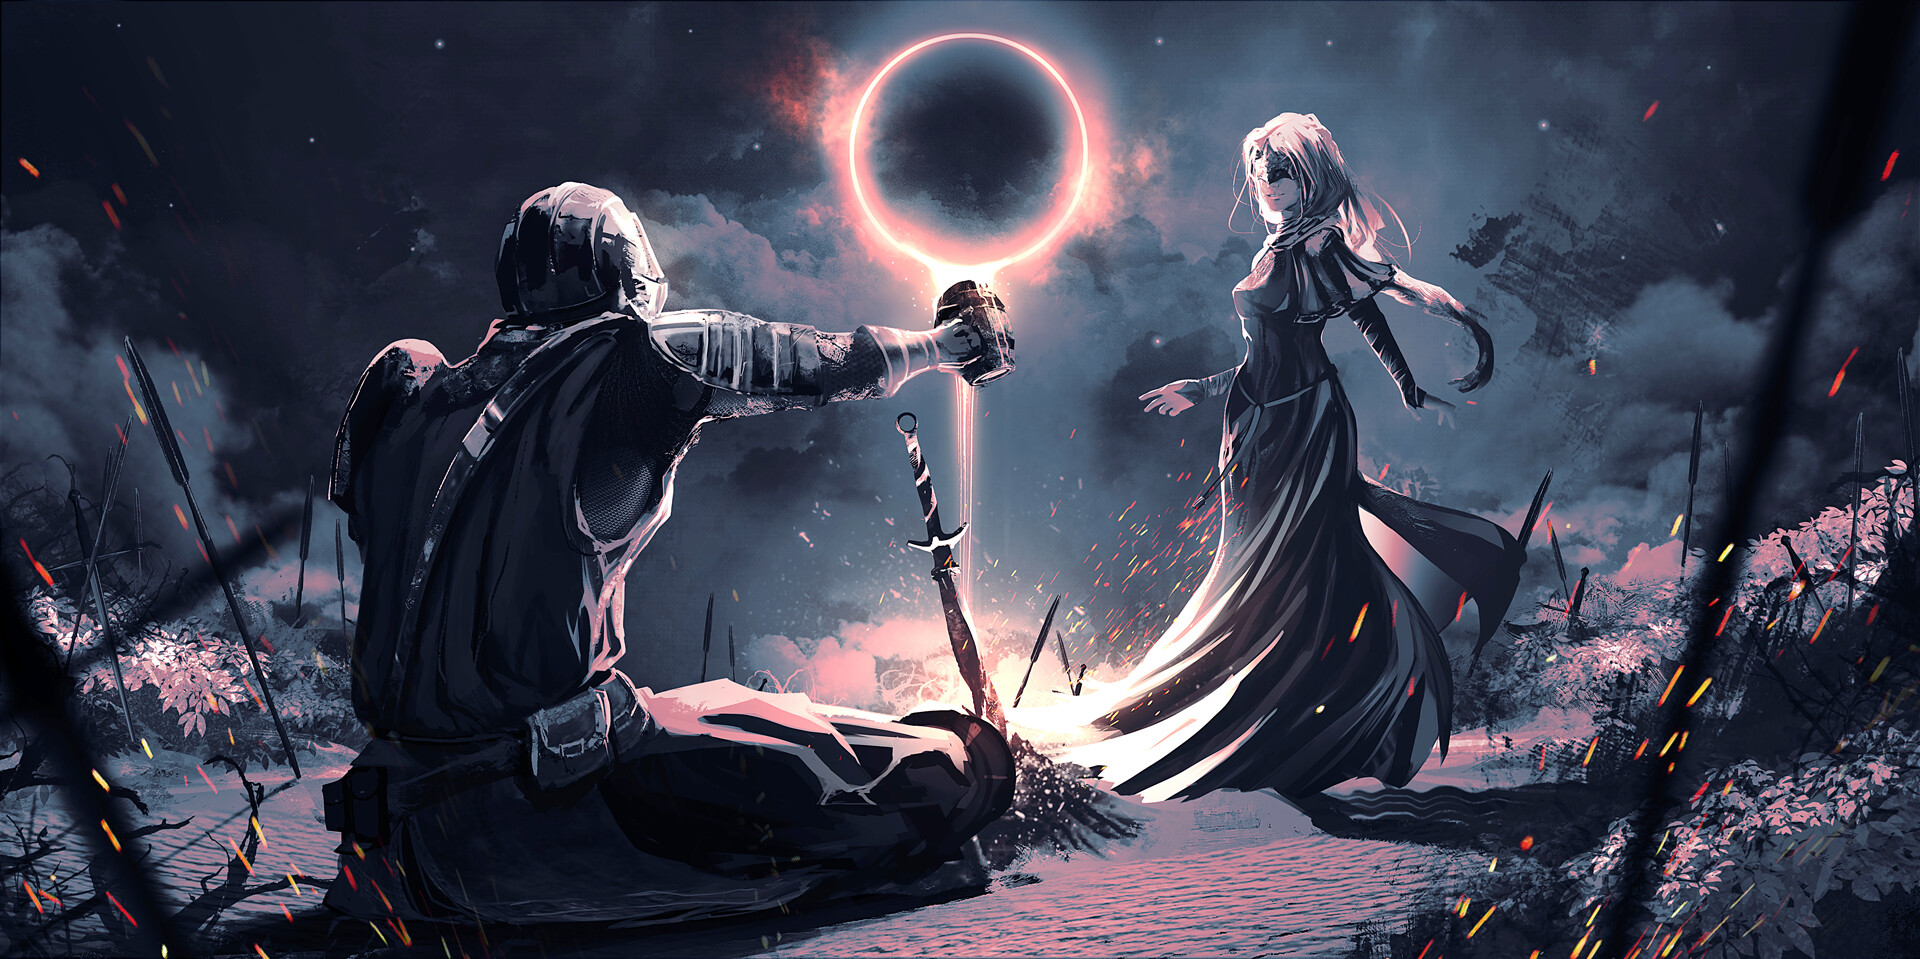 Rashed AlAkroka Dark Souls 3 Fantasy Art Sword Knight Eclipse Sparks Women Dress Mug Bonfire 1920x959